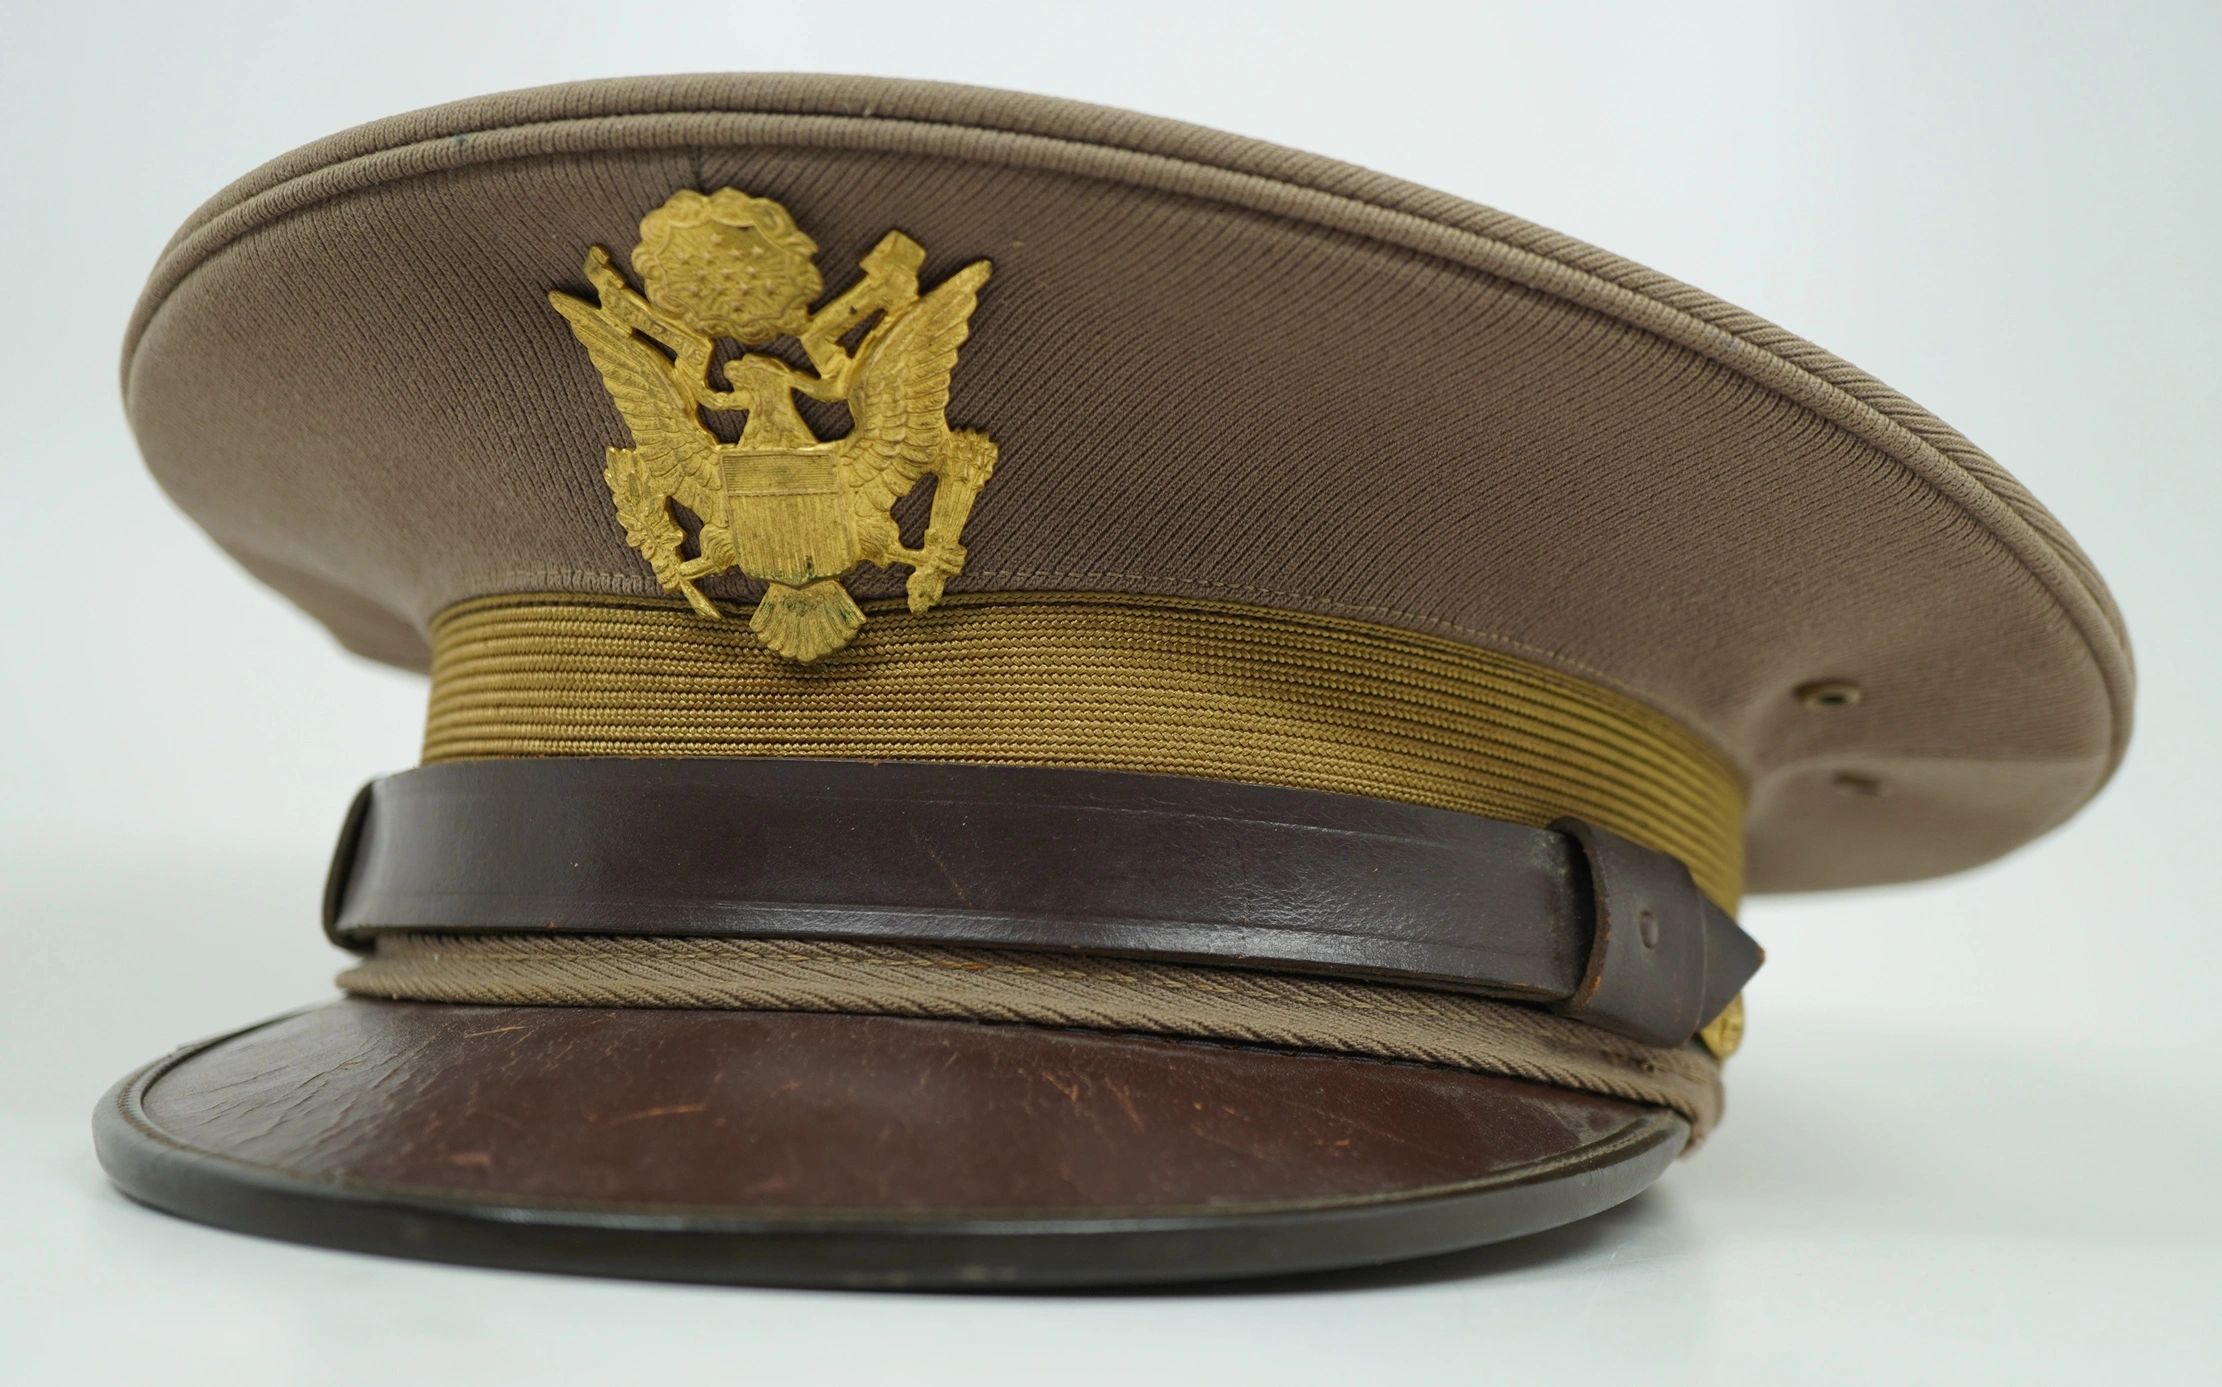 WW2 era "Pink" Officer Visor Cap